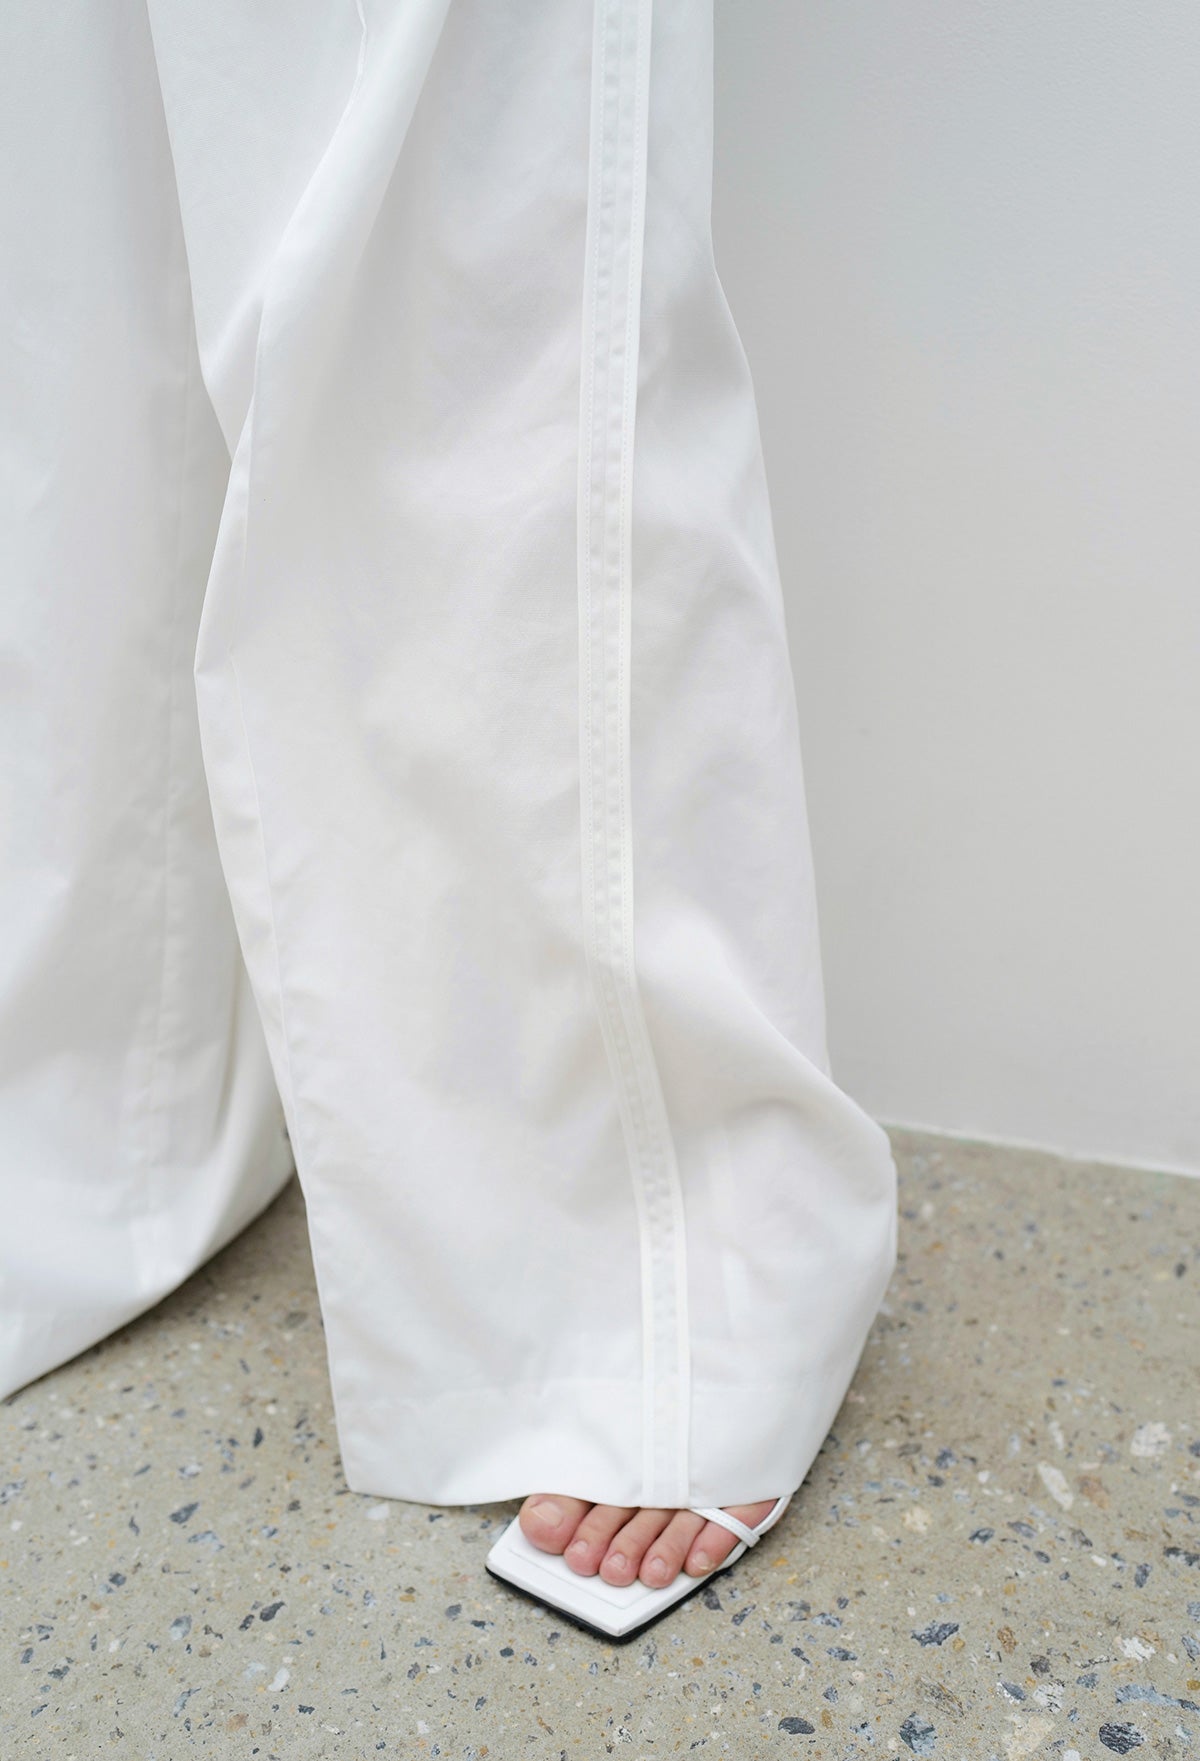 Zentra Elastic-waist Pants In White